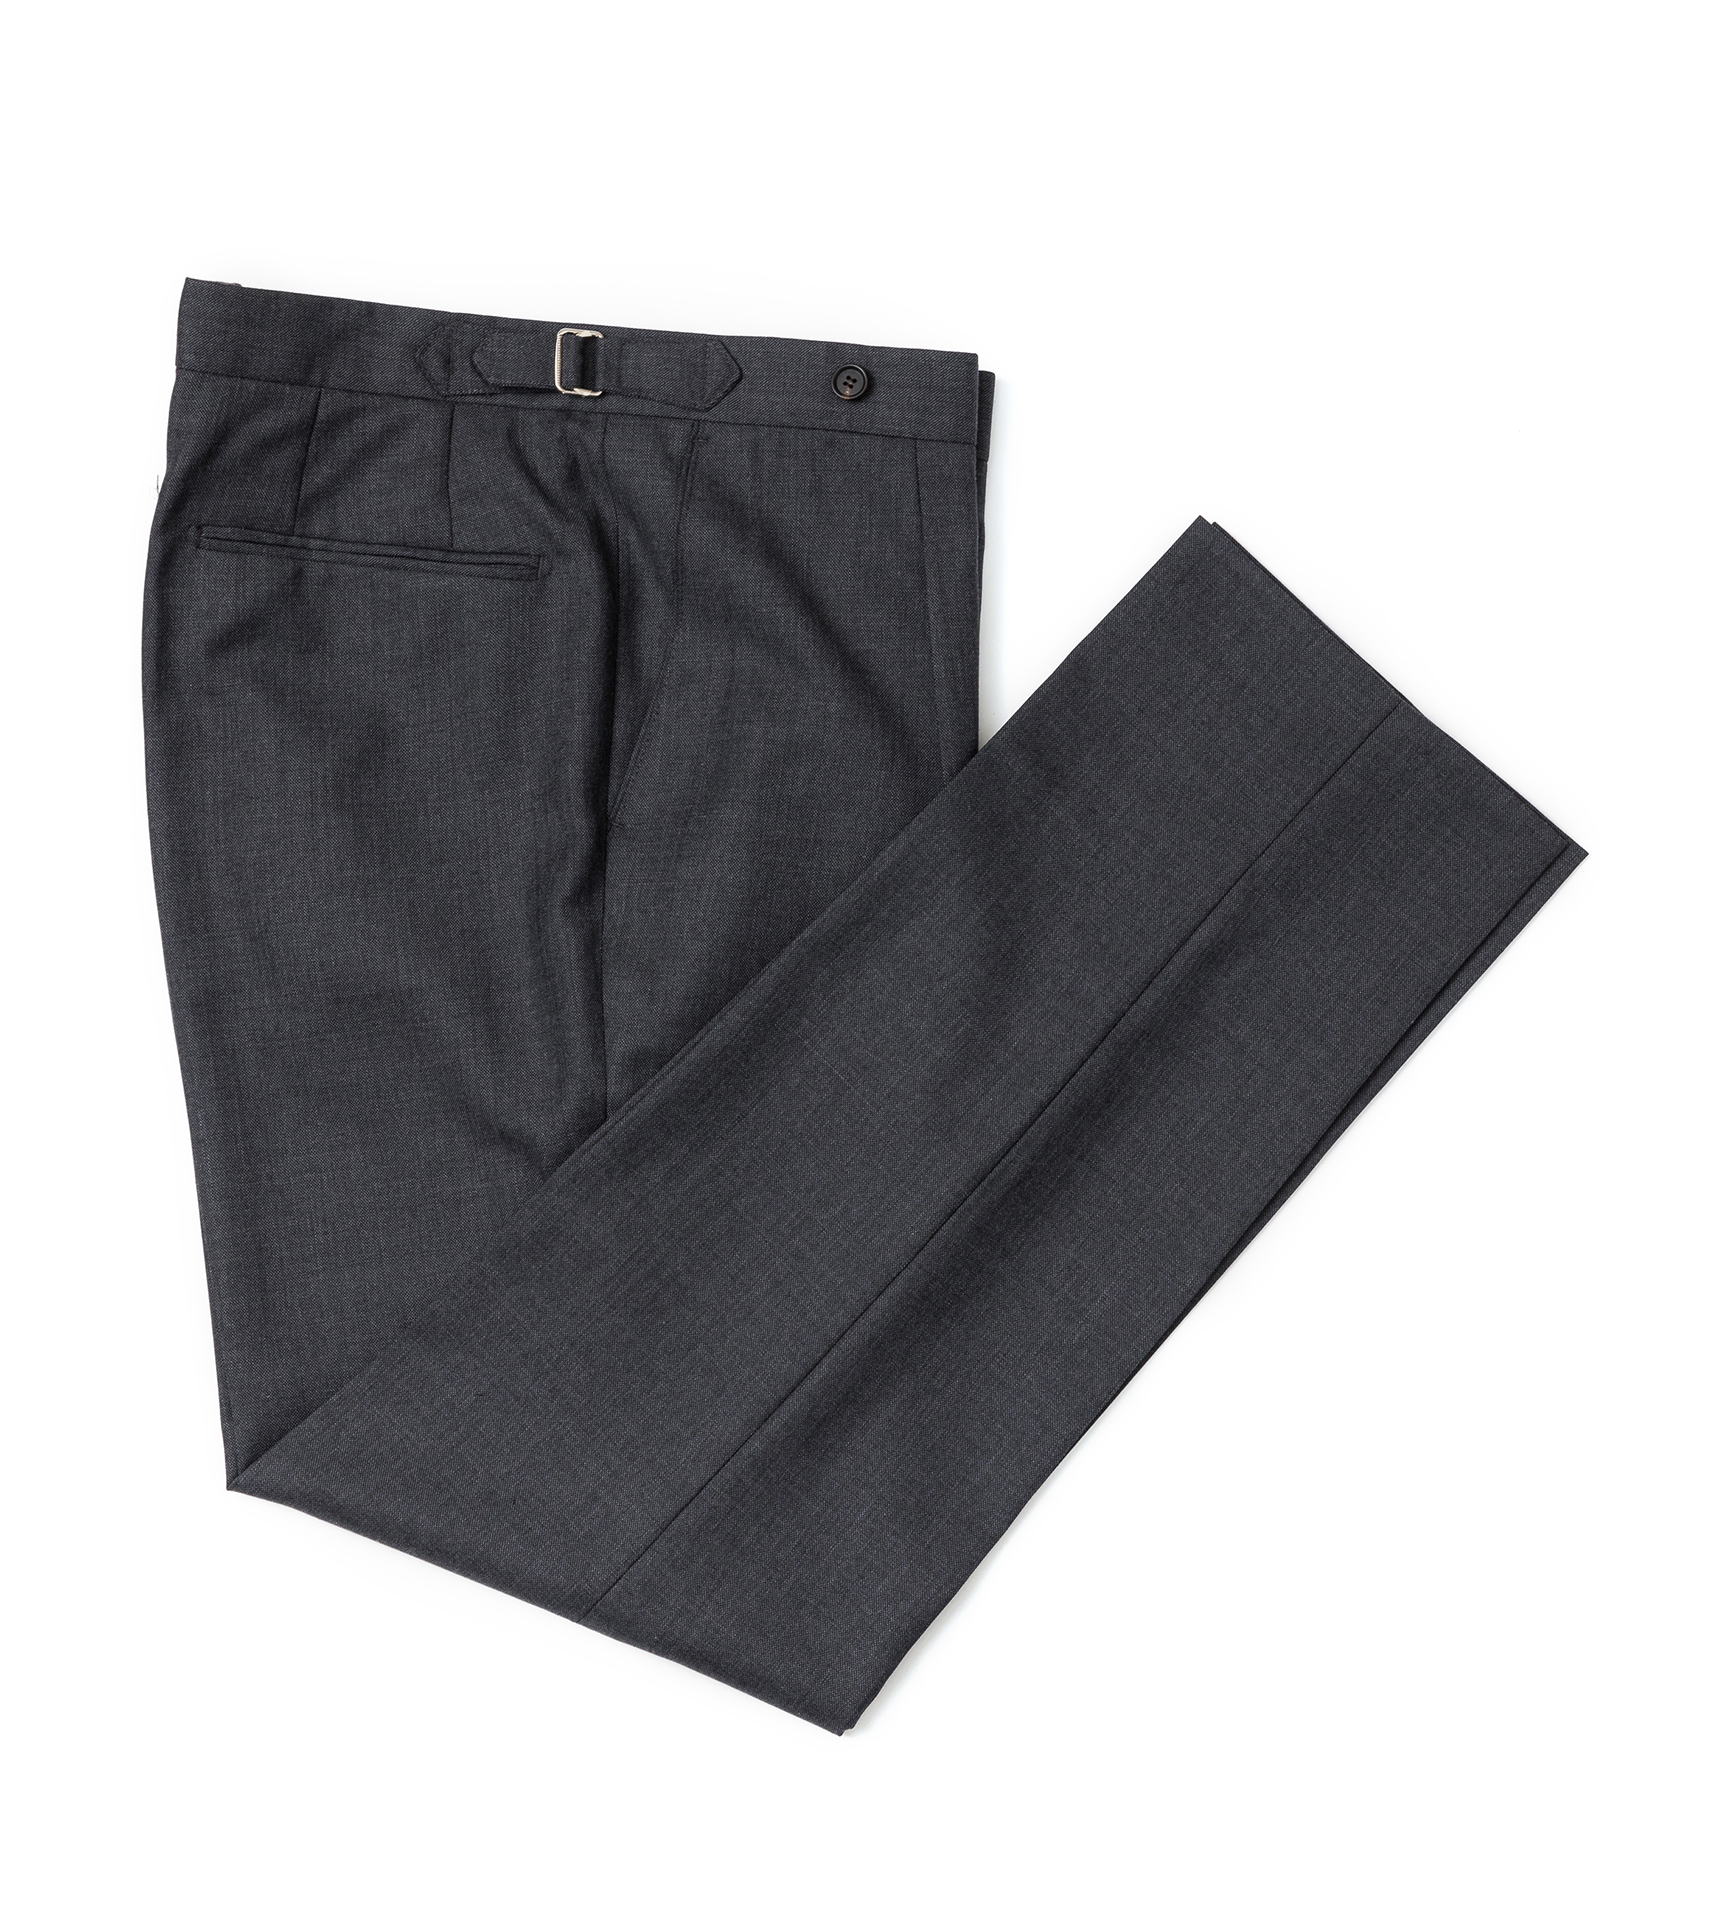 Barrington Wool pants - Charcoal gray (285G)